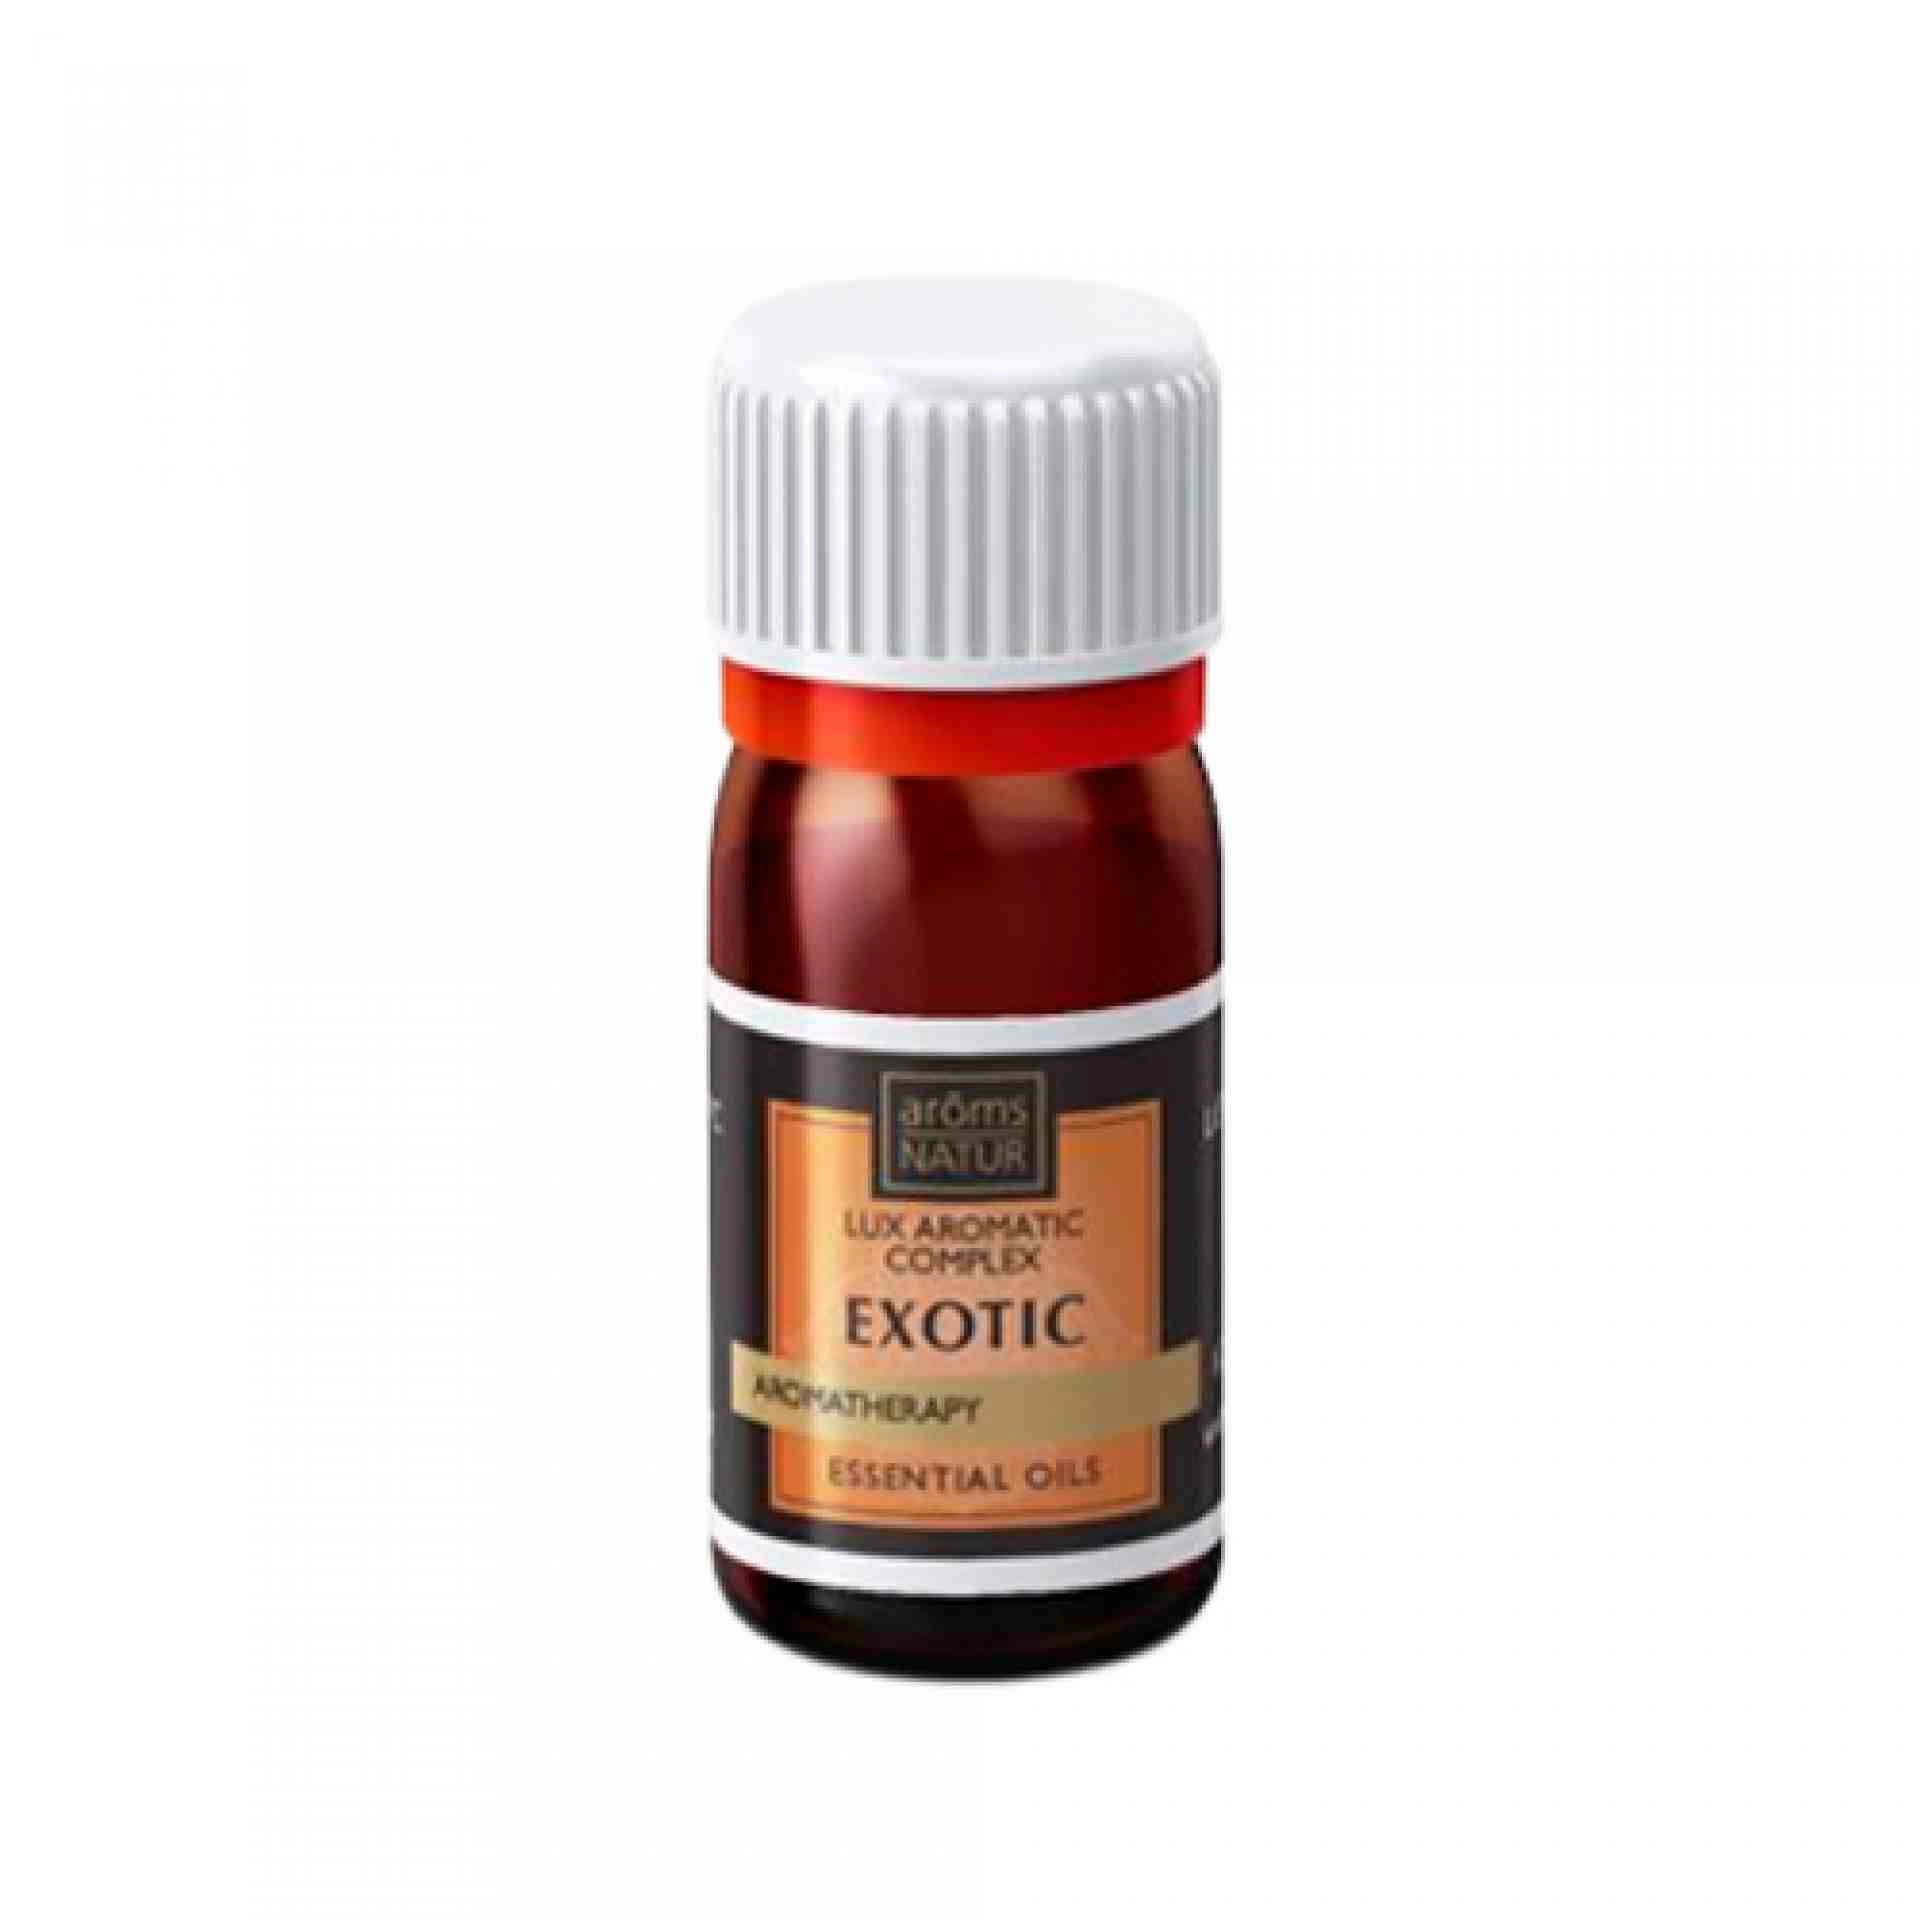 Exotic Lux Aromatic Complex | Sinergia aromática - Esential Diffusion - Arôms Natur ®